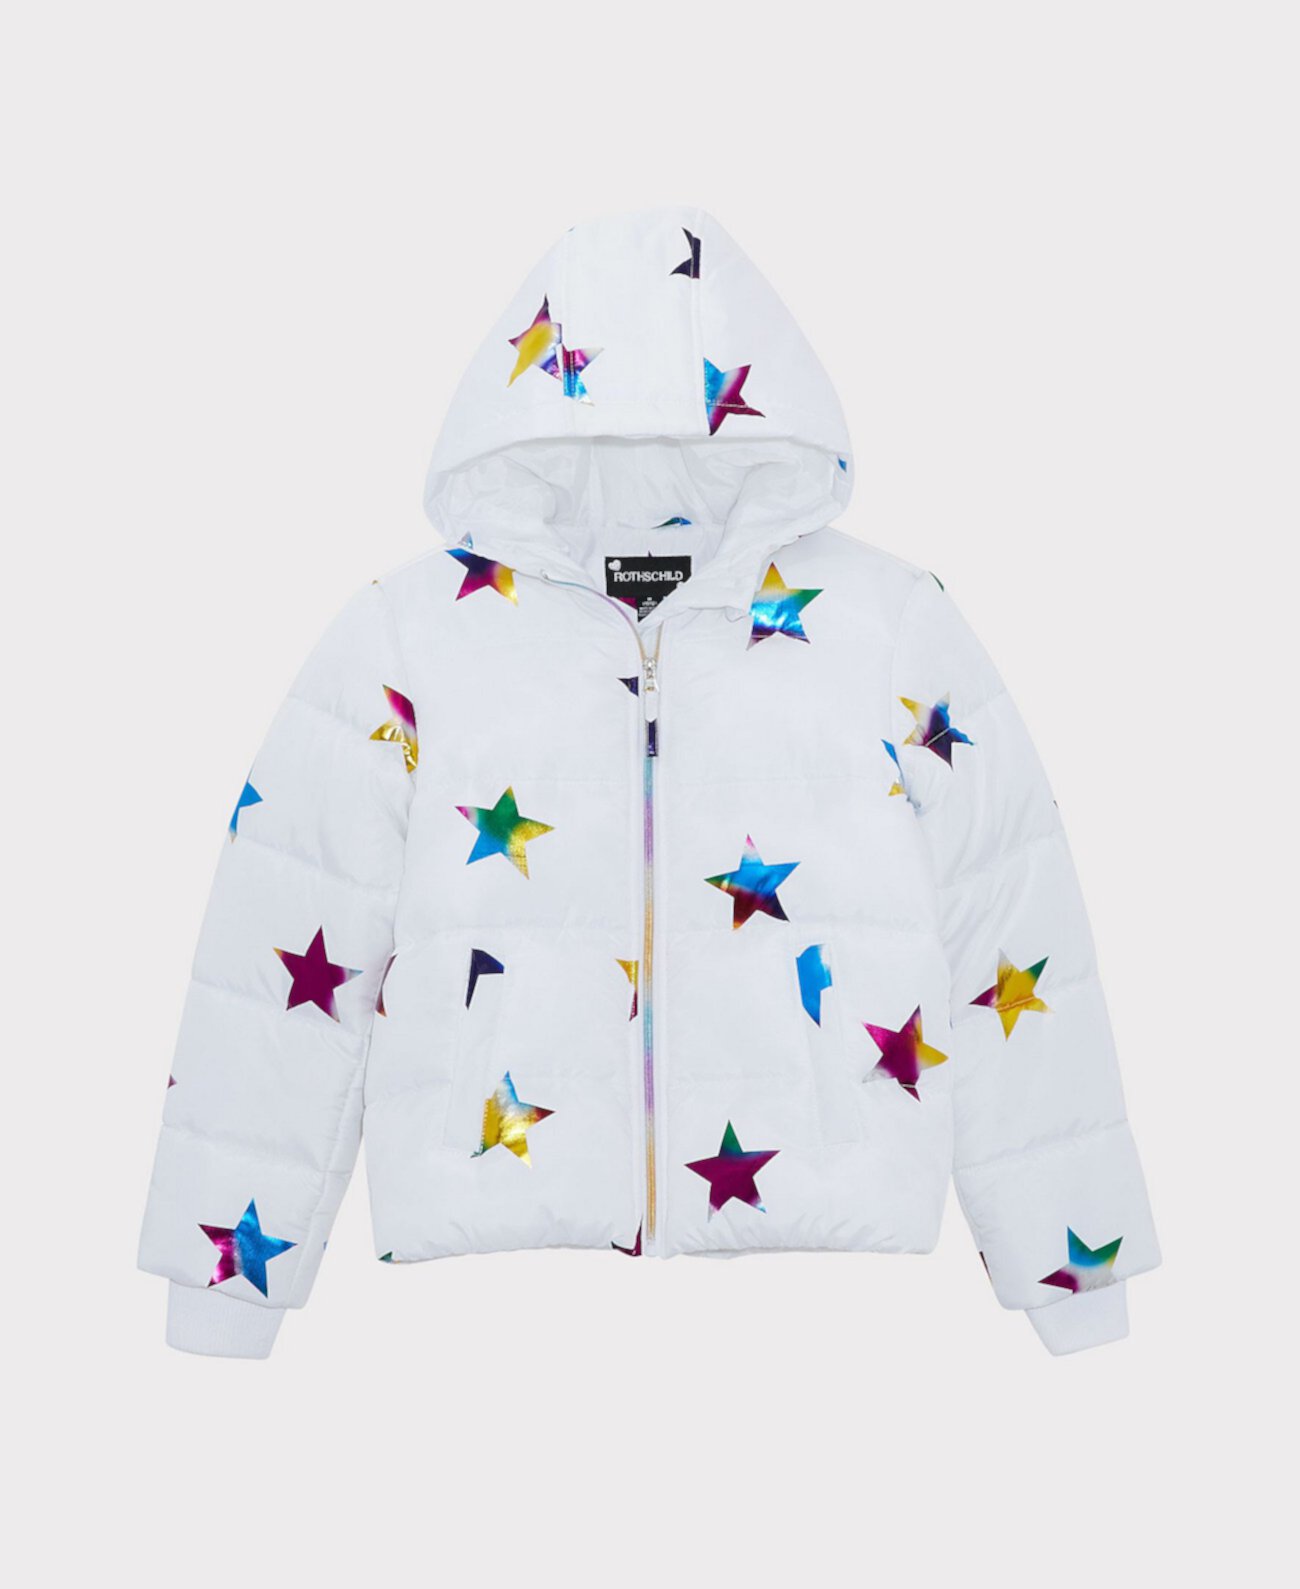 Big Girls Rainbow Star Jacket S Rothschild & CO